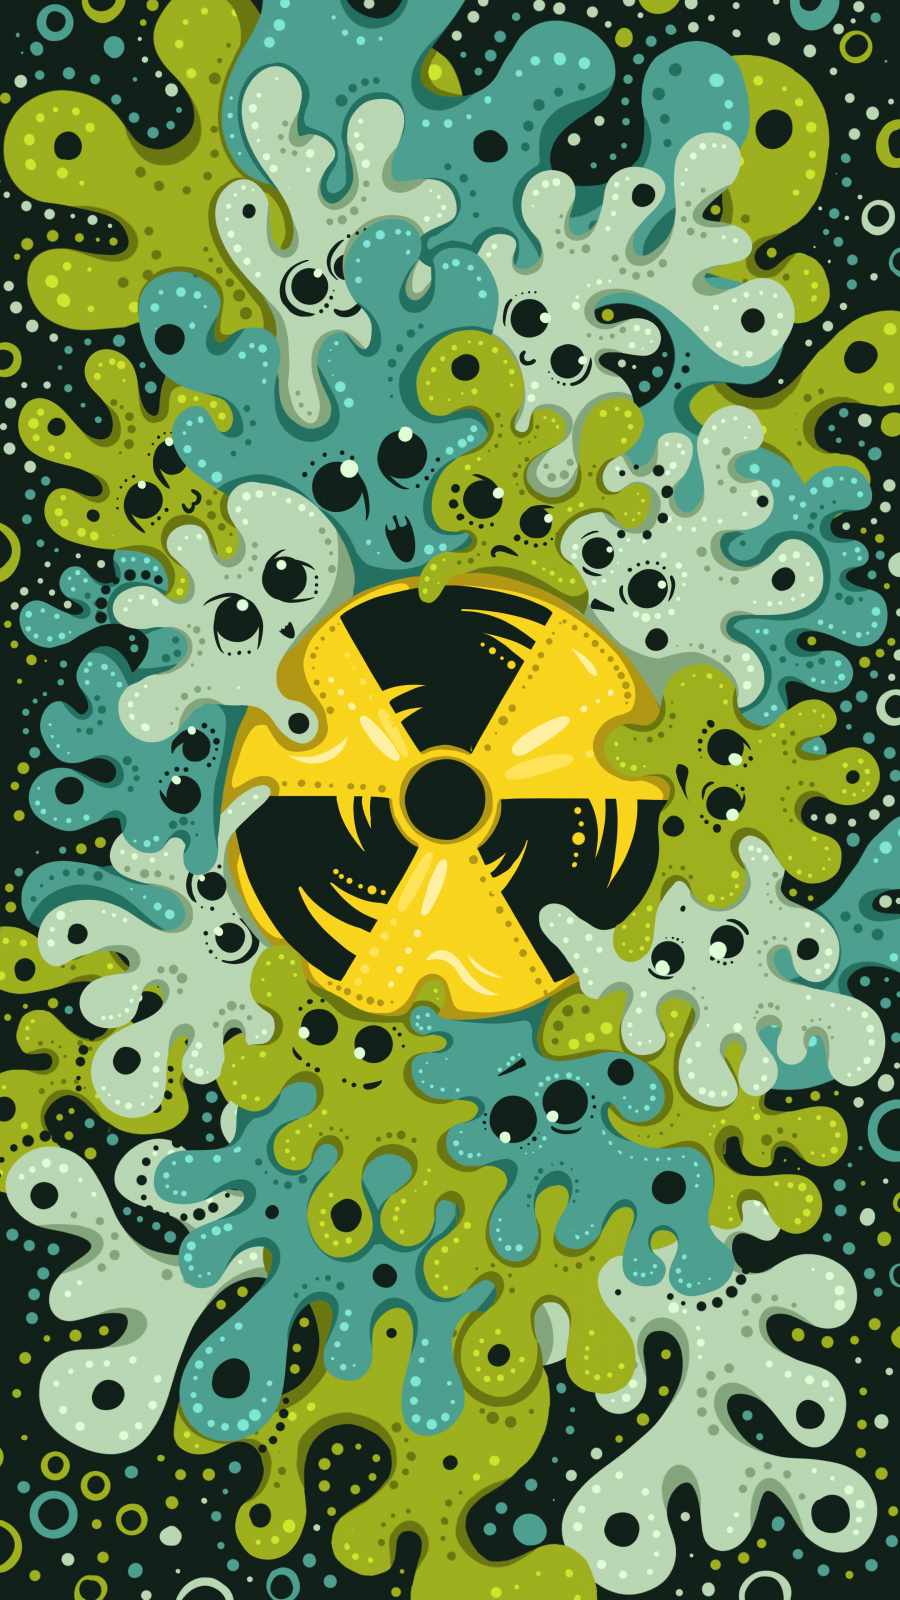 Radioactive IPhone Wallpaper - IPhone Wallpapers : iPhone Wallpapers